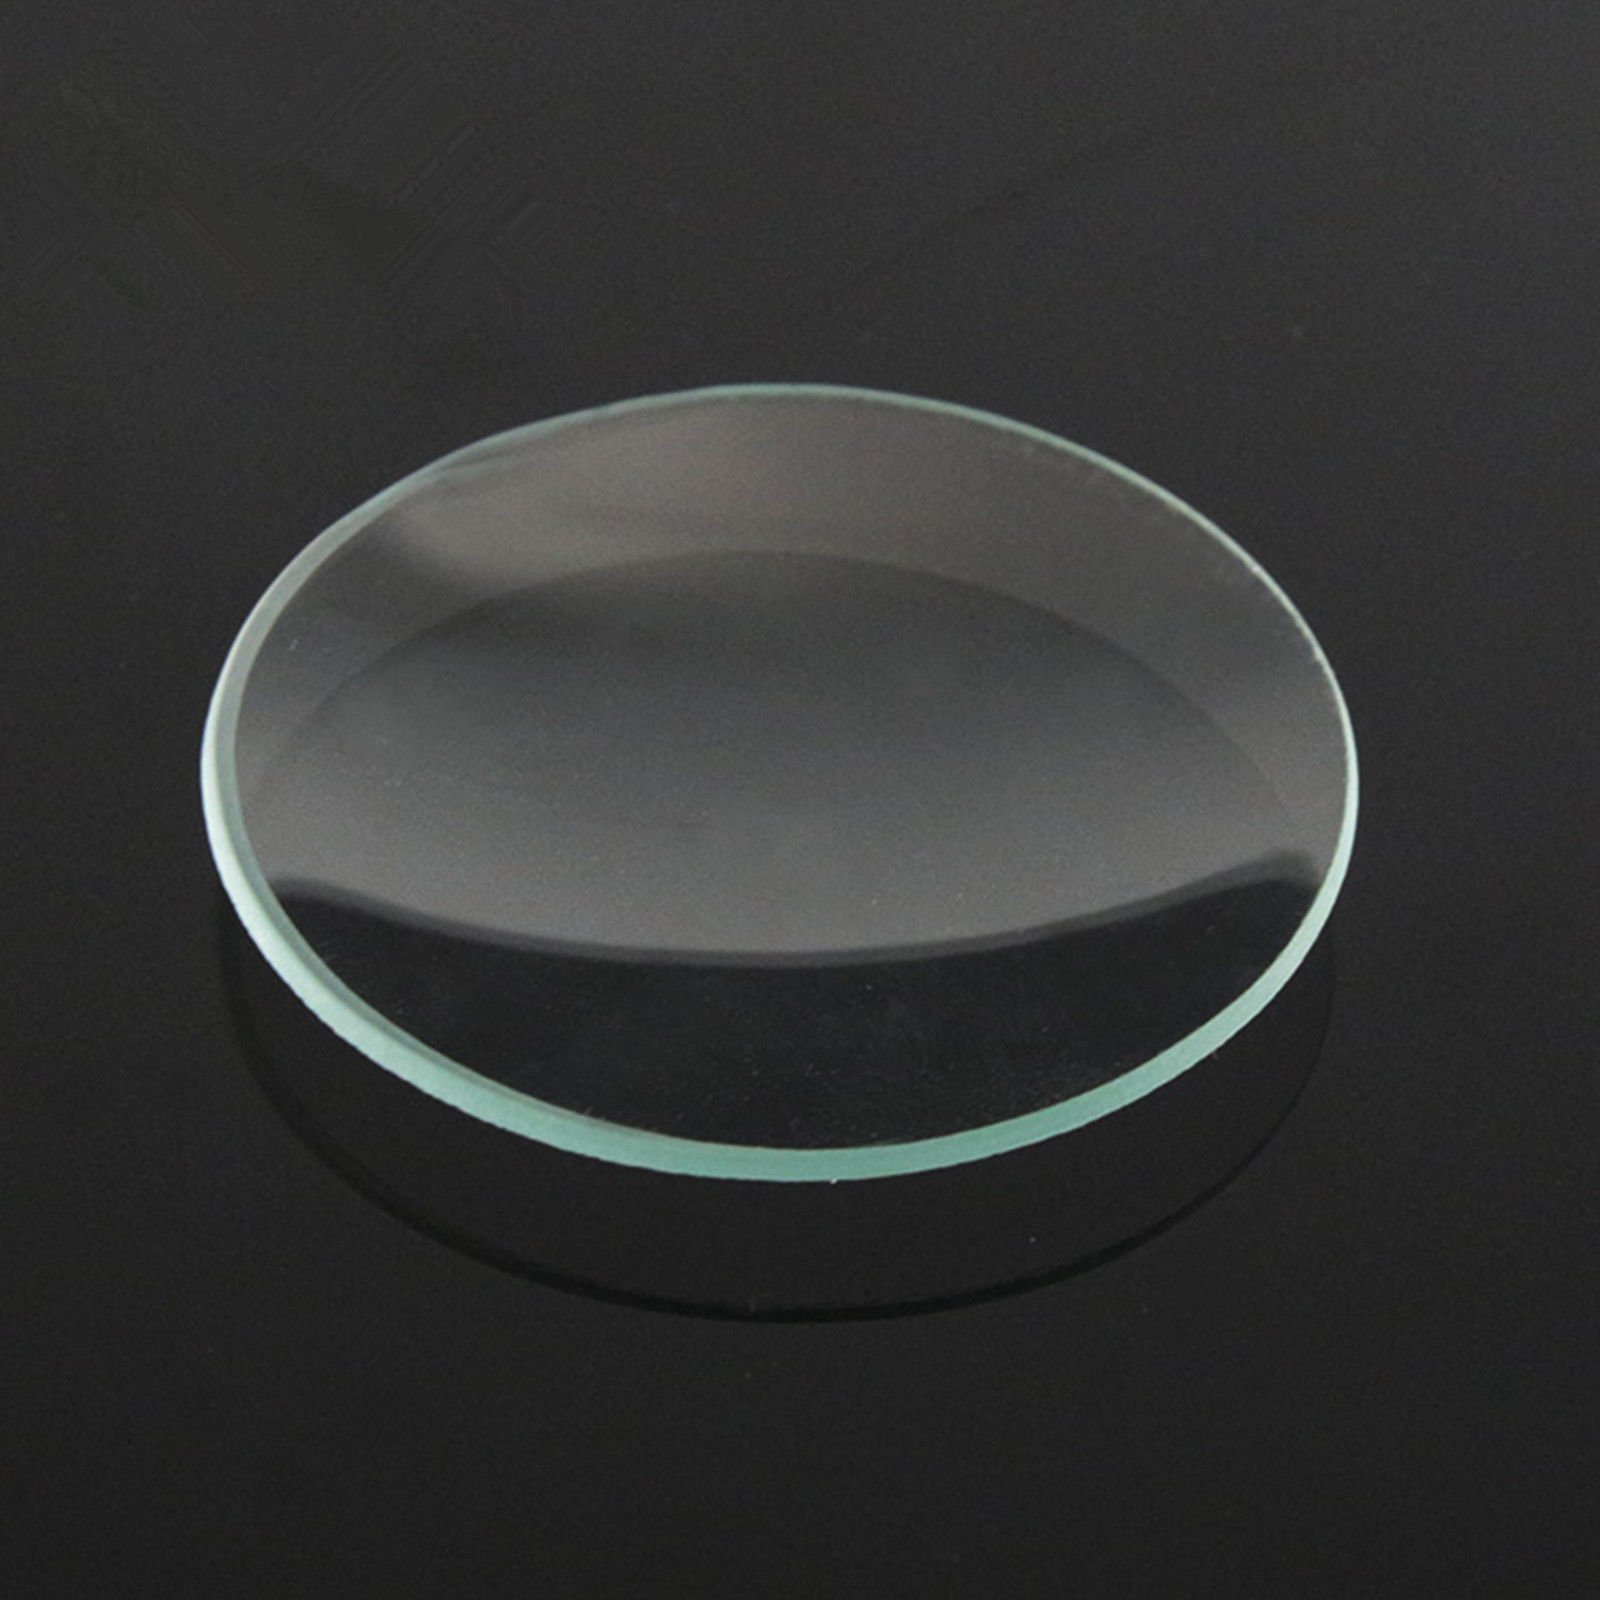 50mm, laboratorie ur glas skål, overflade disk, ydre diameter 5cm,10 stk / parti